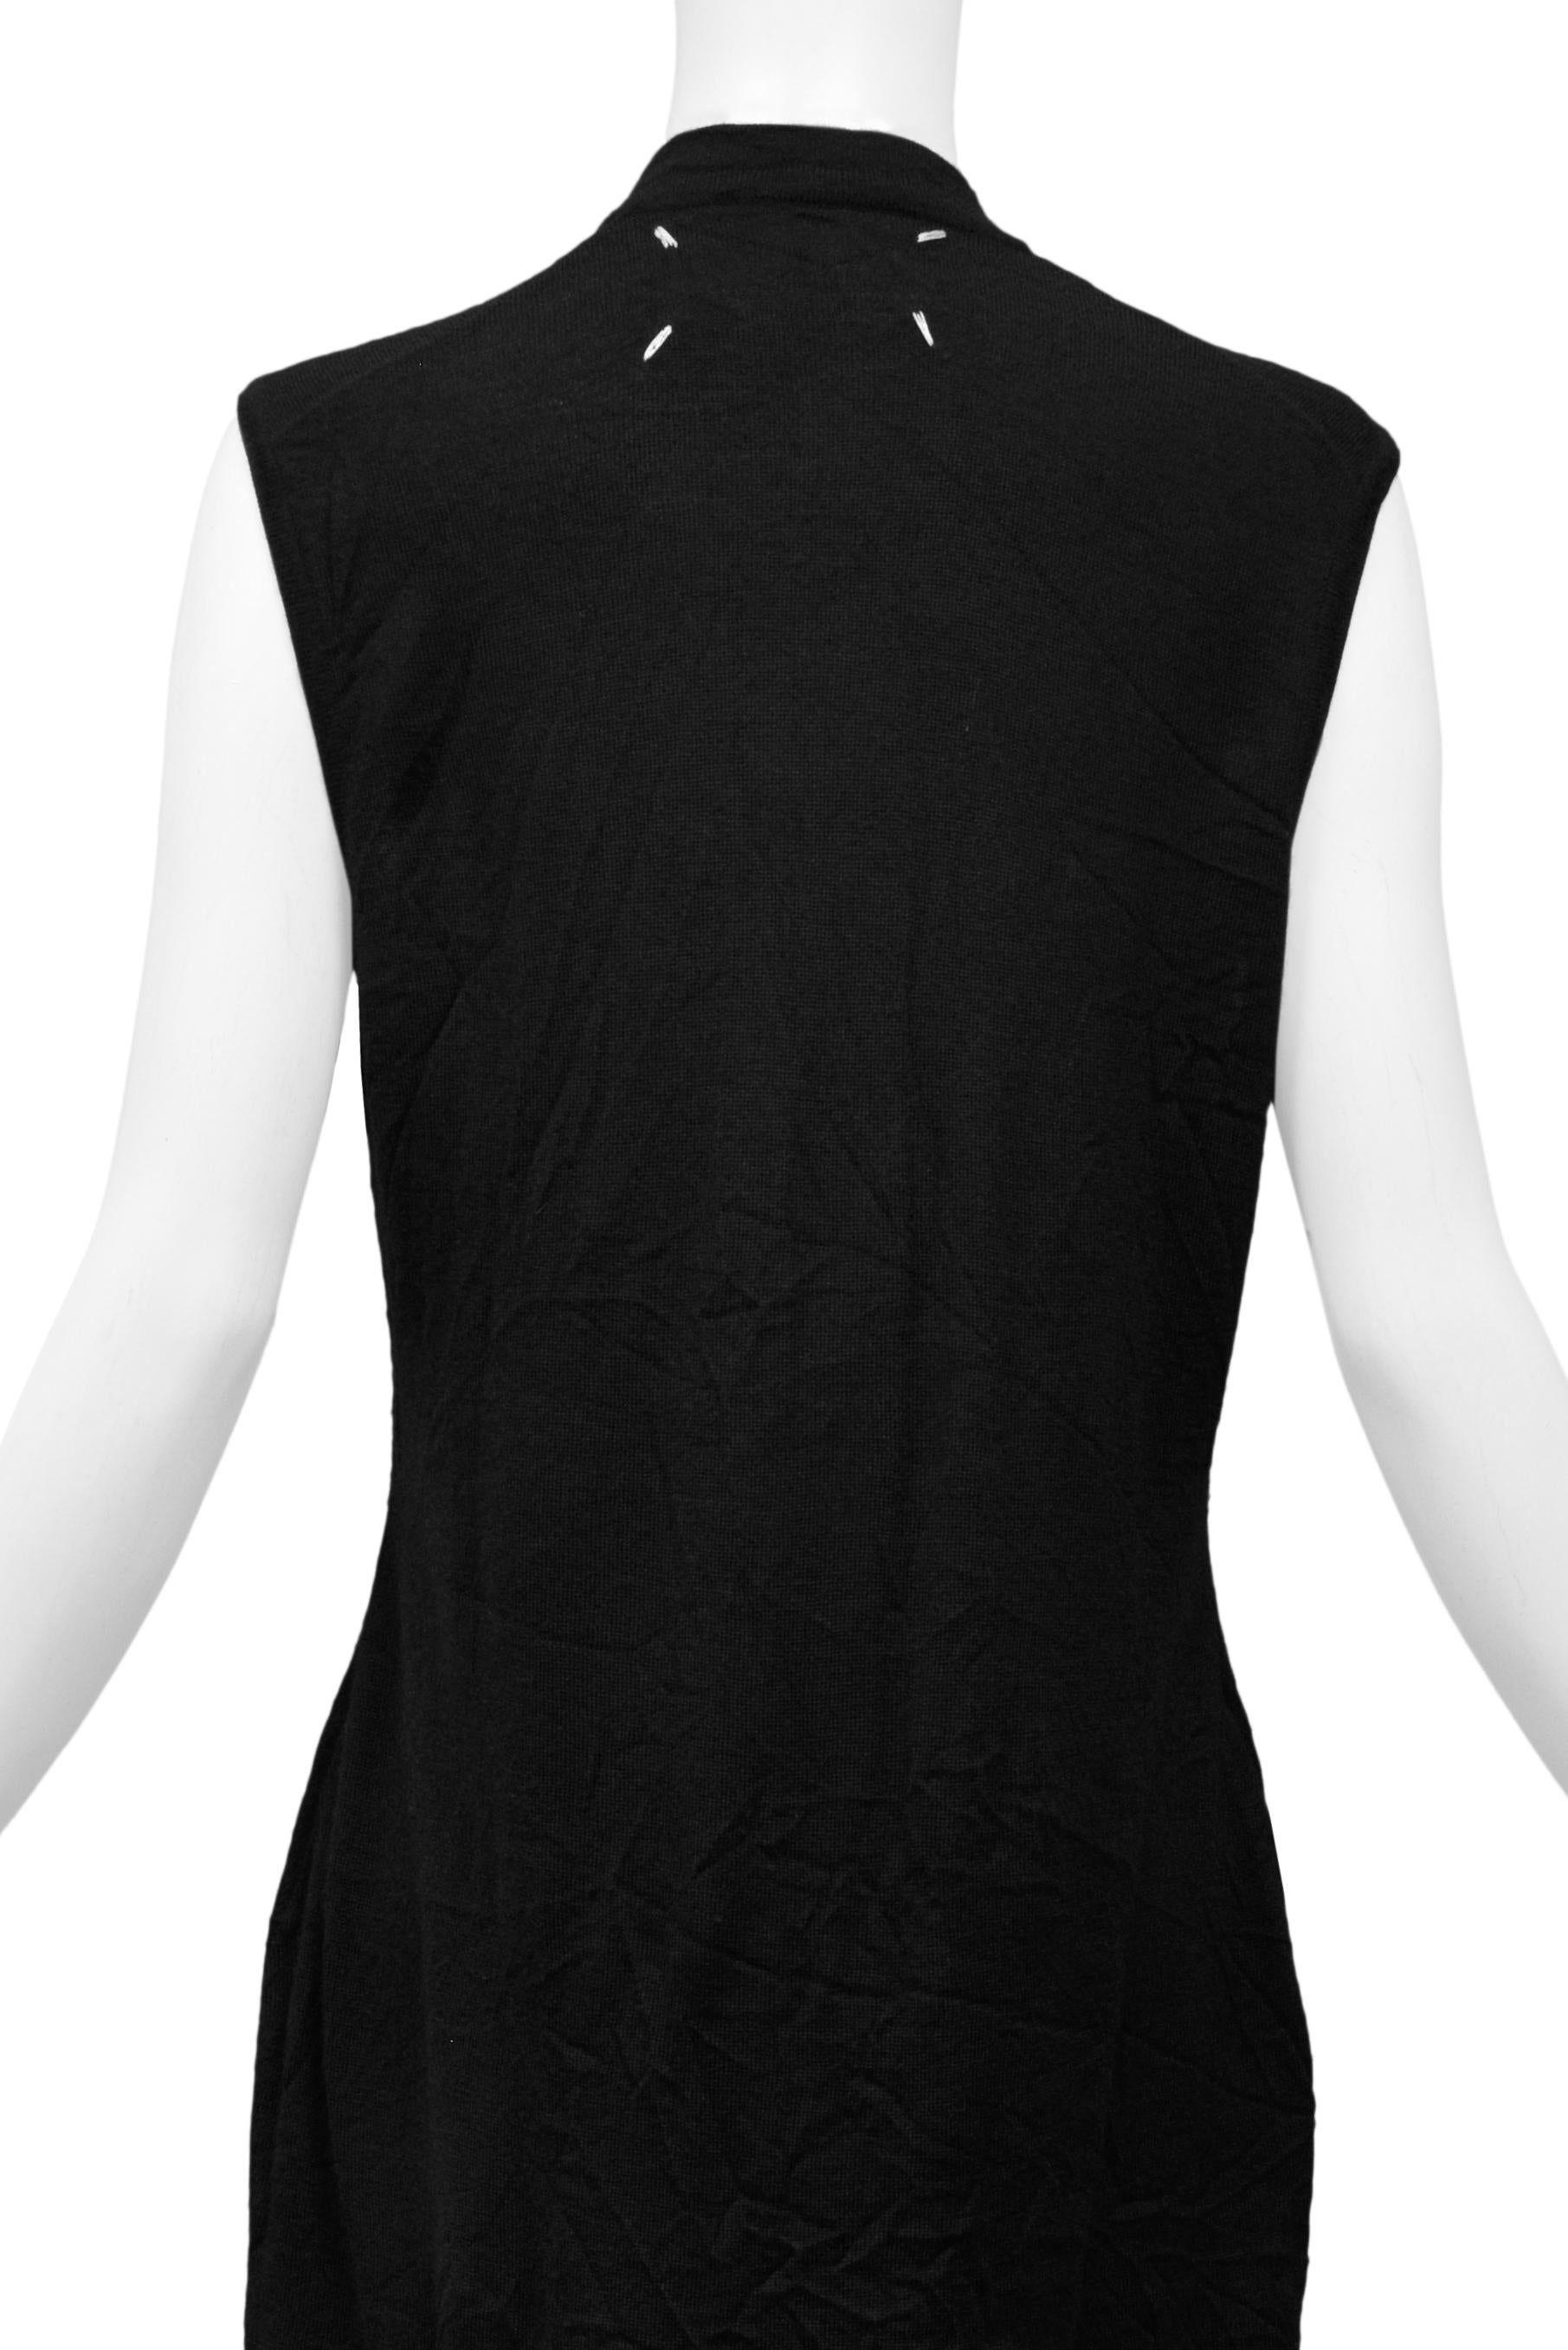 Women's Maison Martin Margiela Black Oversized Maxi Sweater Dress For Sale